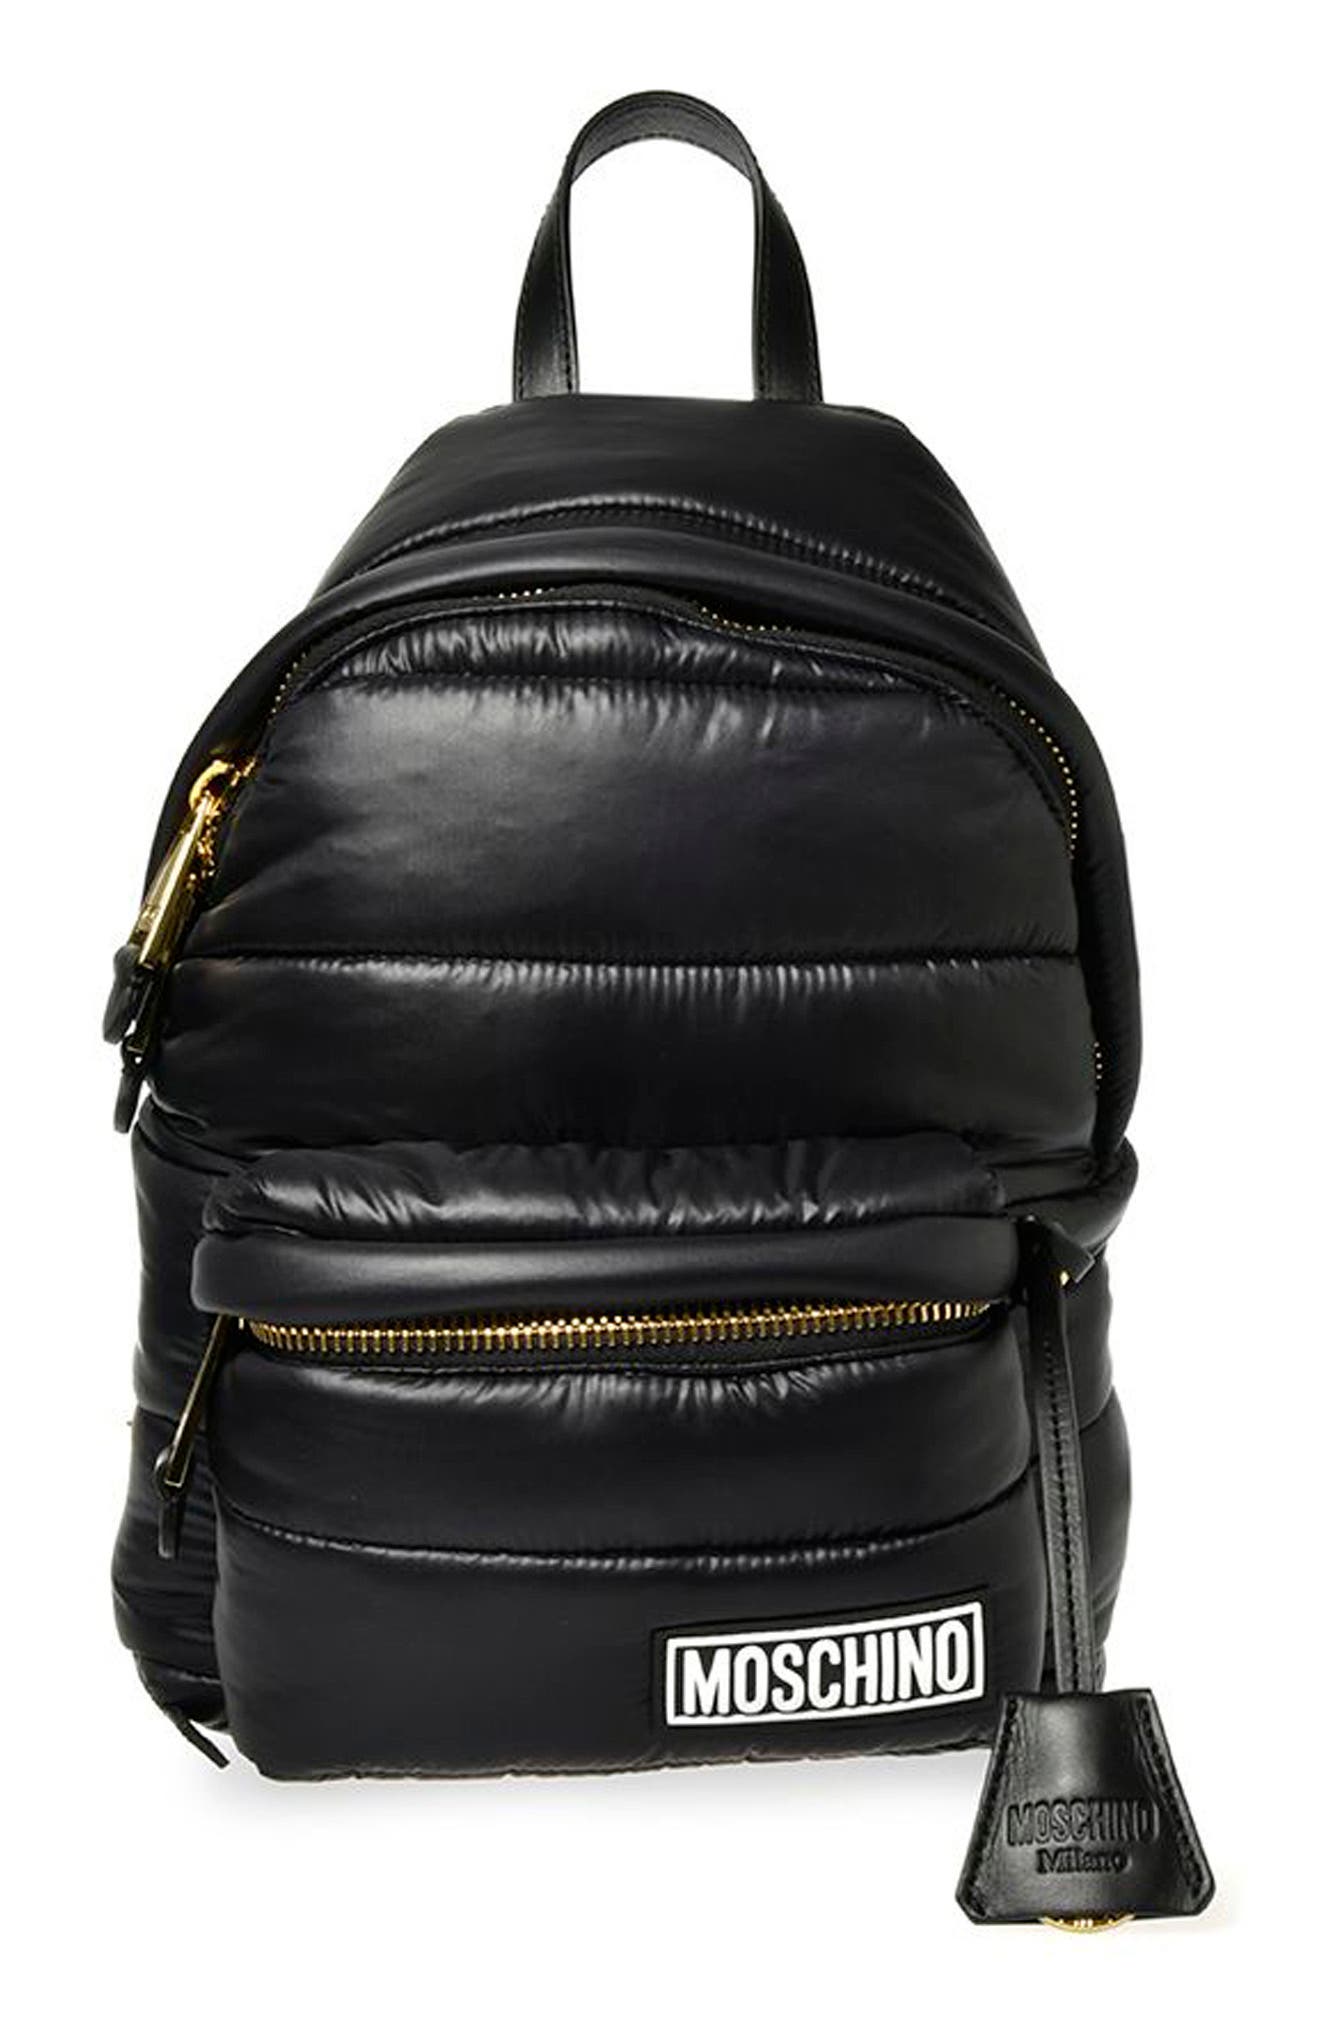 moschino backpack purse